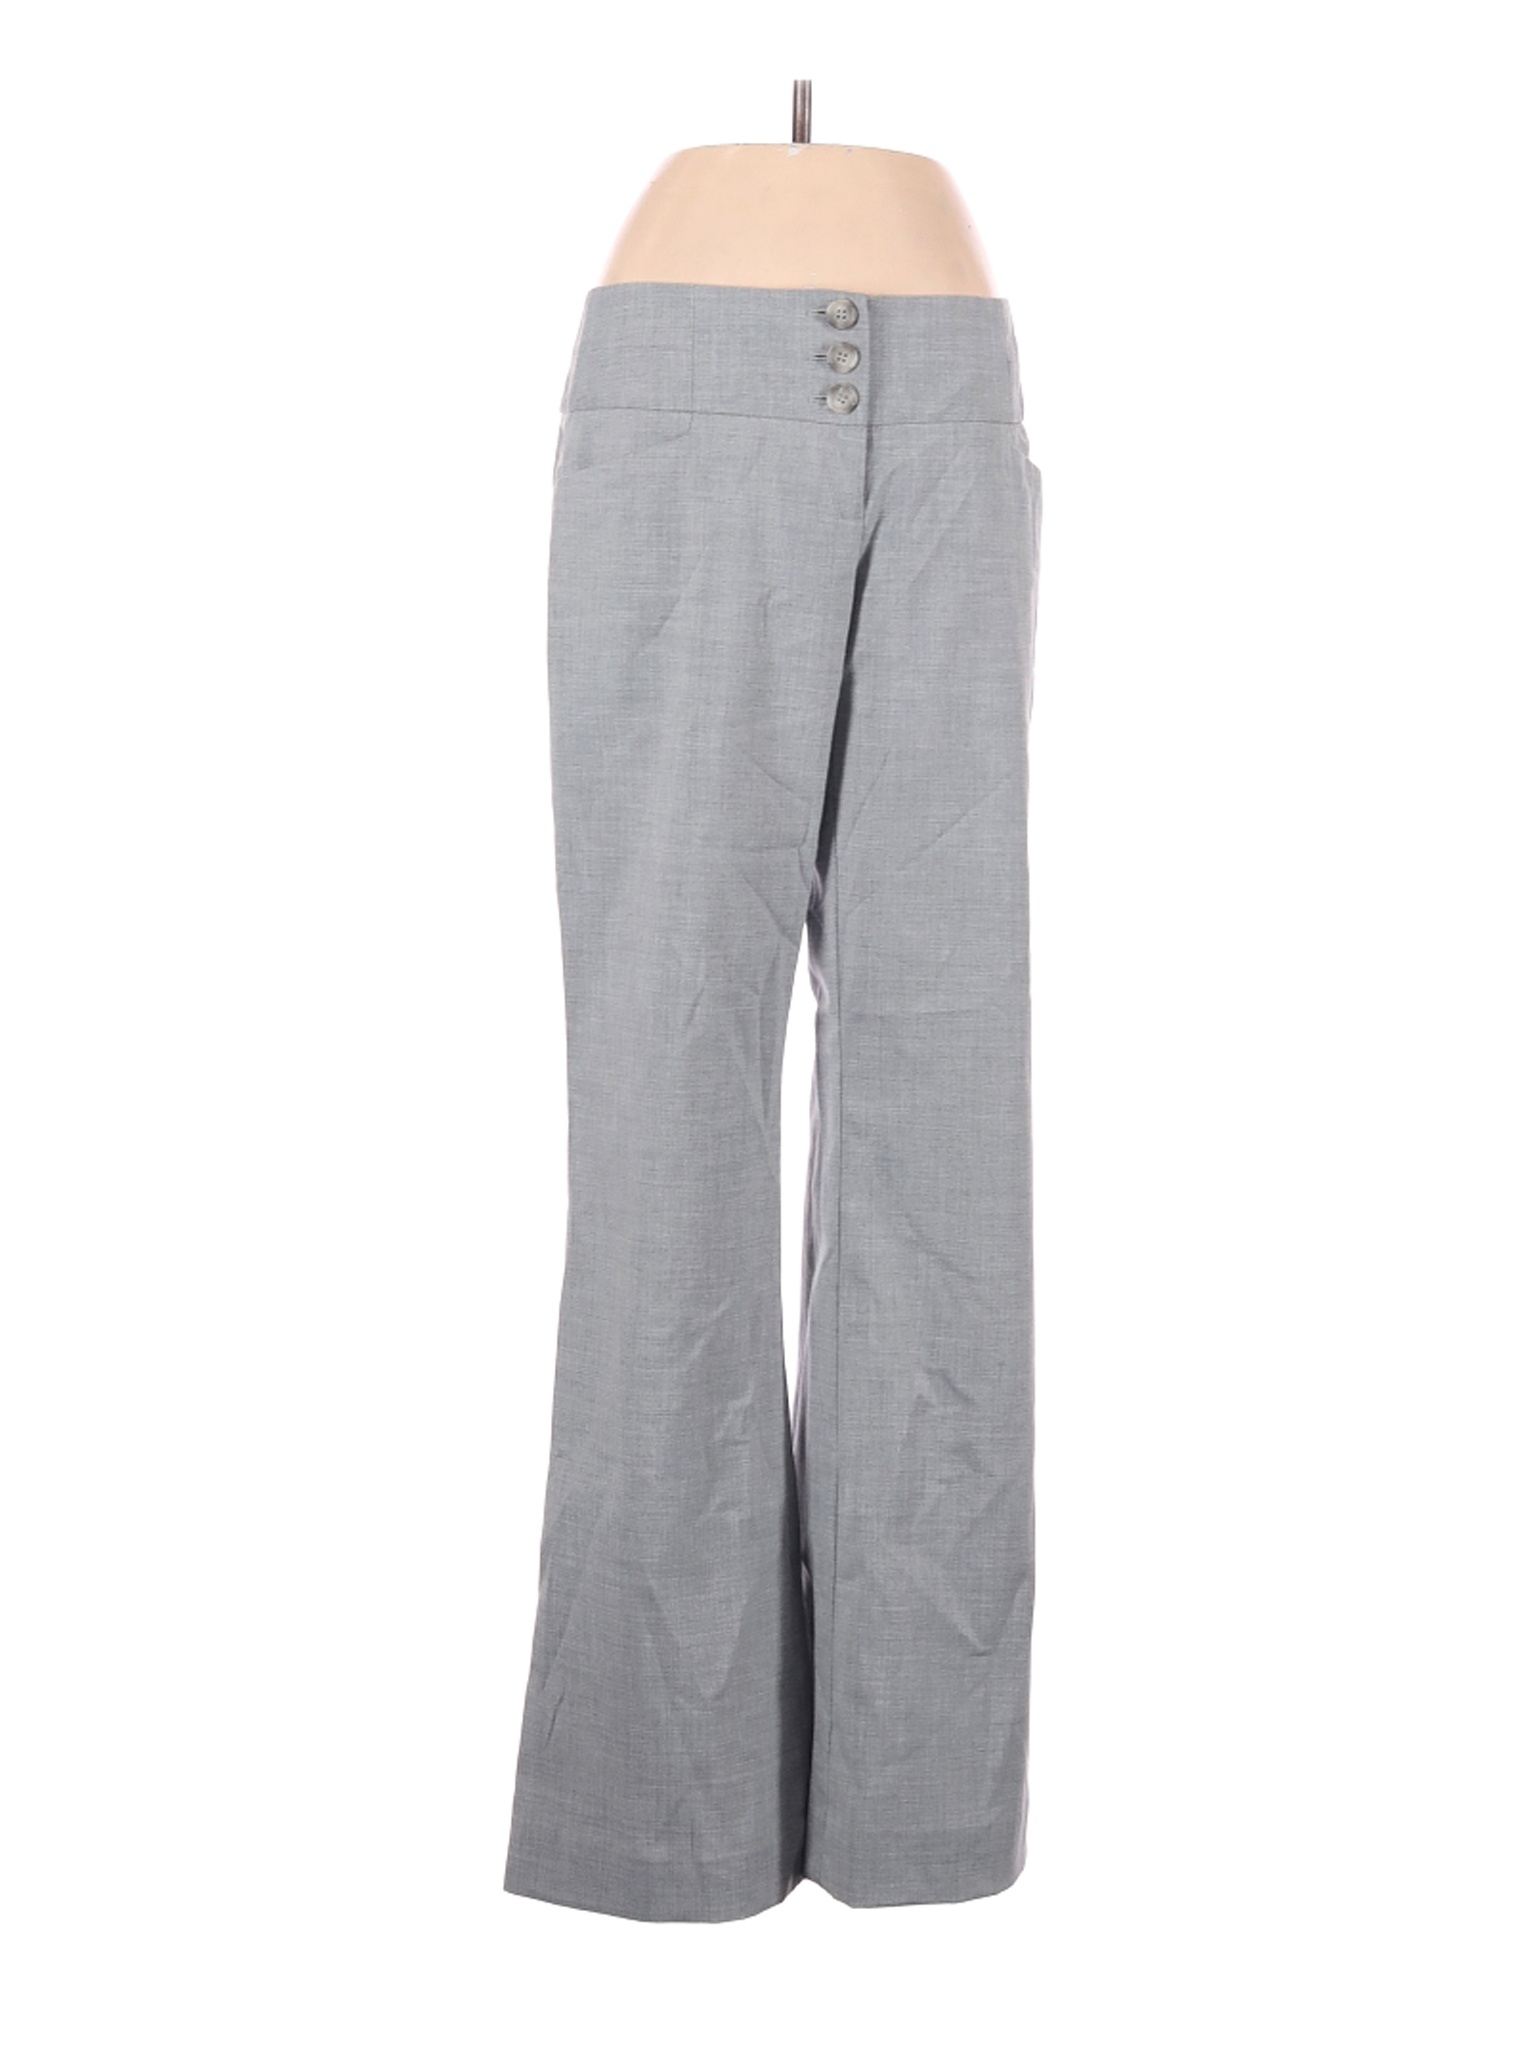 NWT The Limited Women Gray Dress Pants 0 | eBay